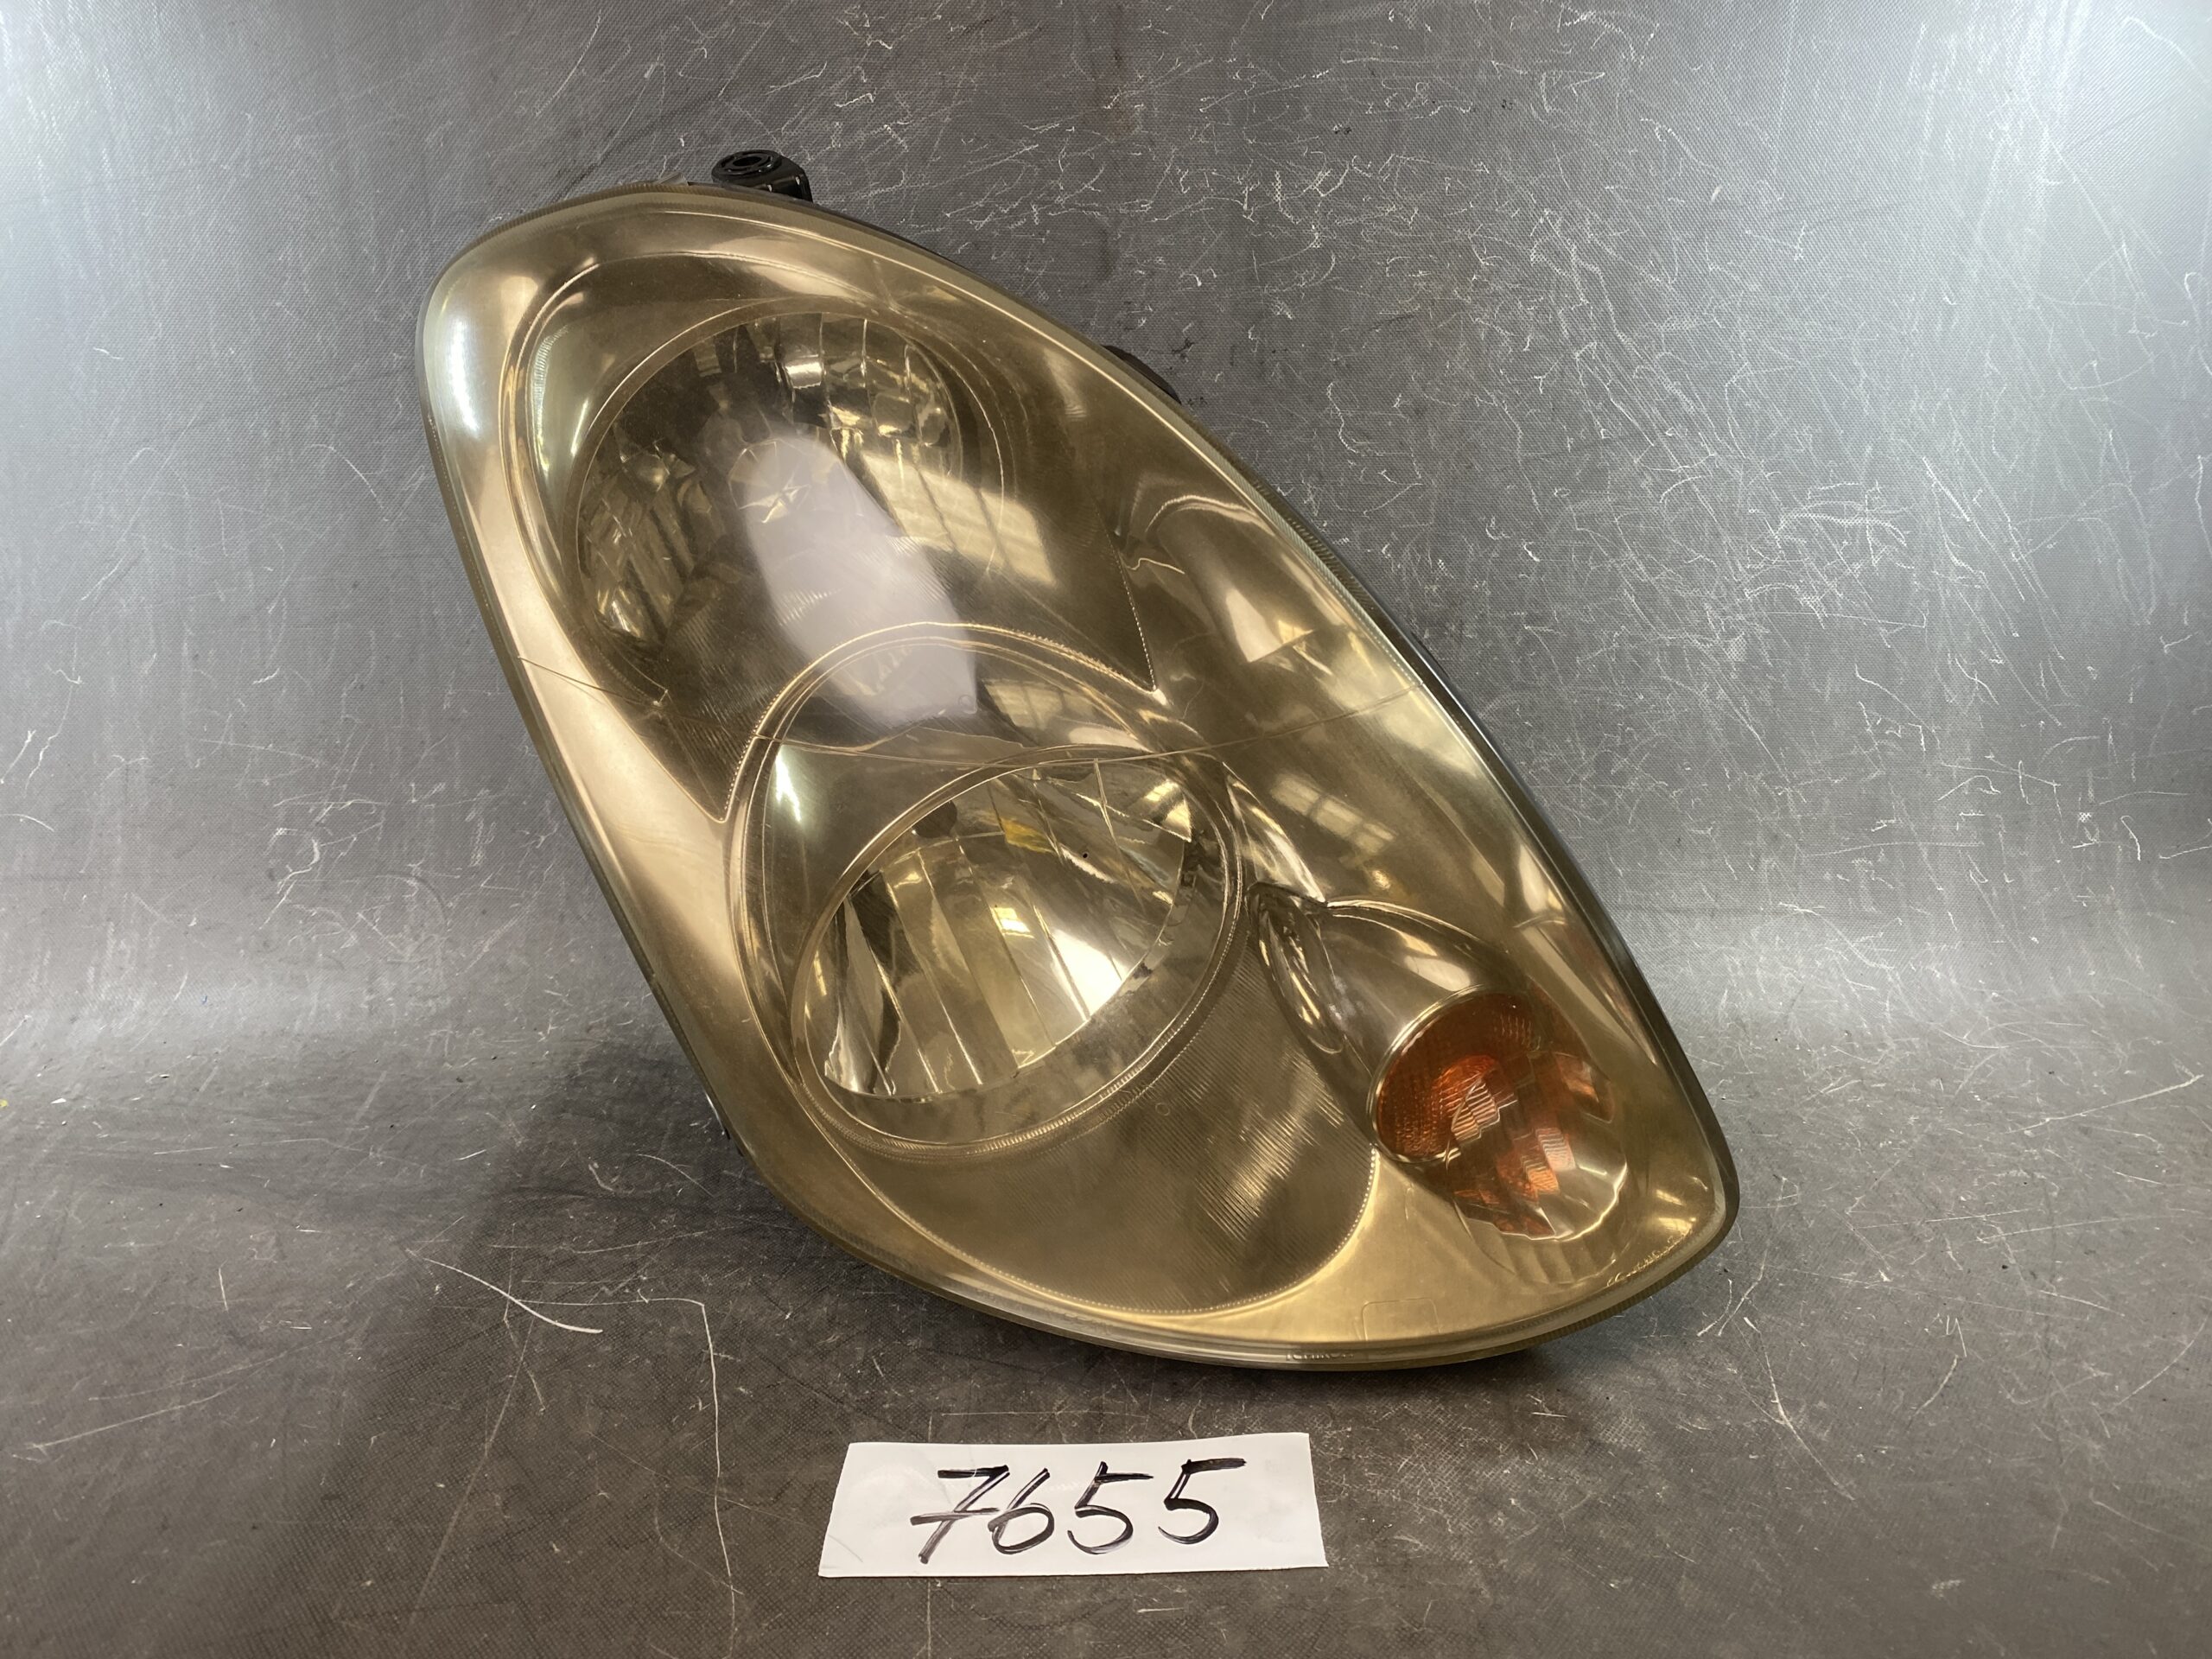 NISSAN SKYLINE V35 NV35 PV35 Genuine HID Headlight / ICHIKOH 1680 / Right  Side x1